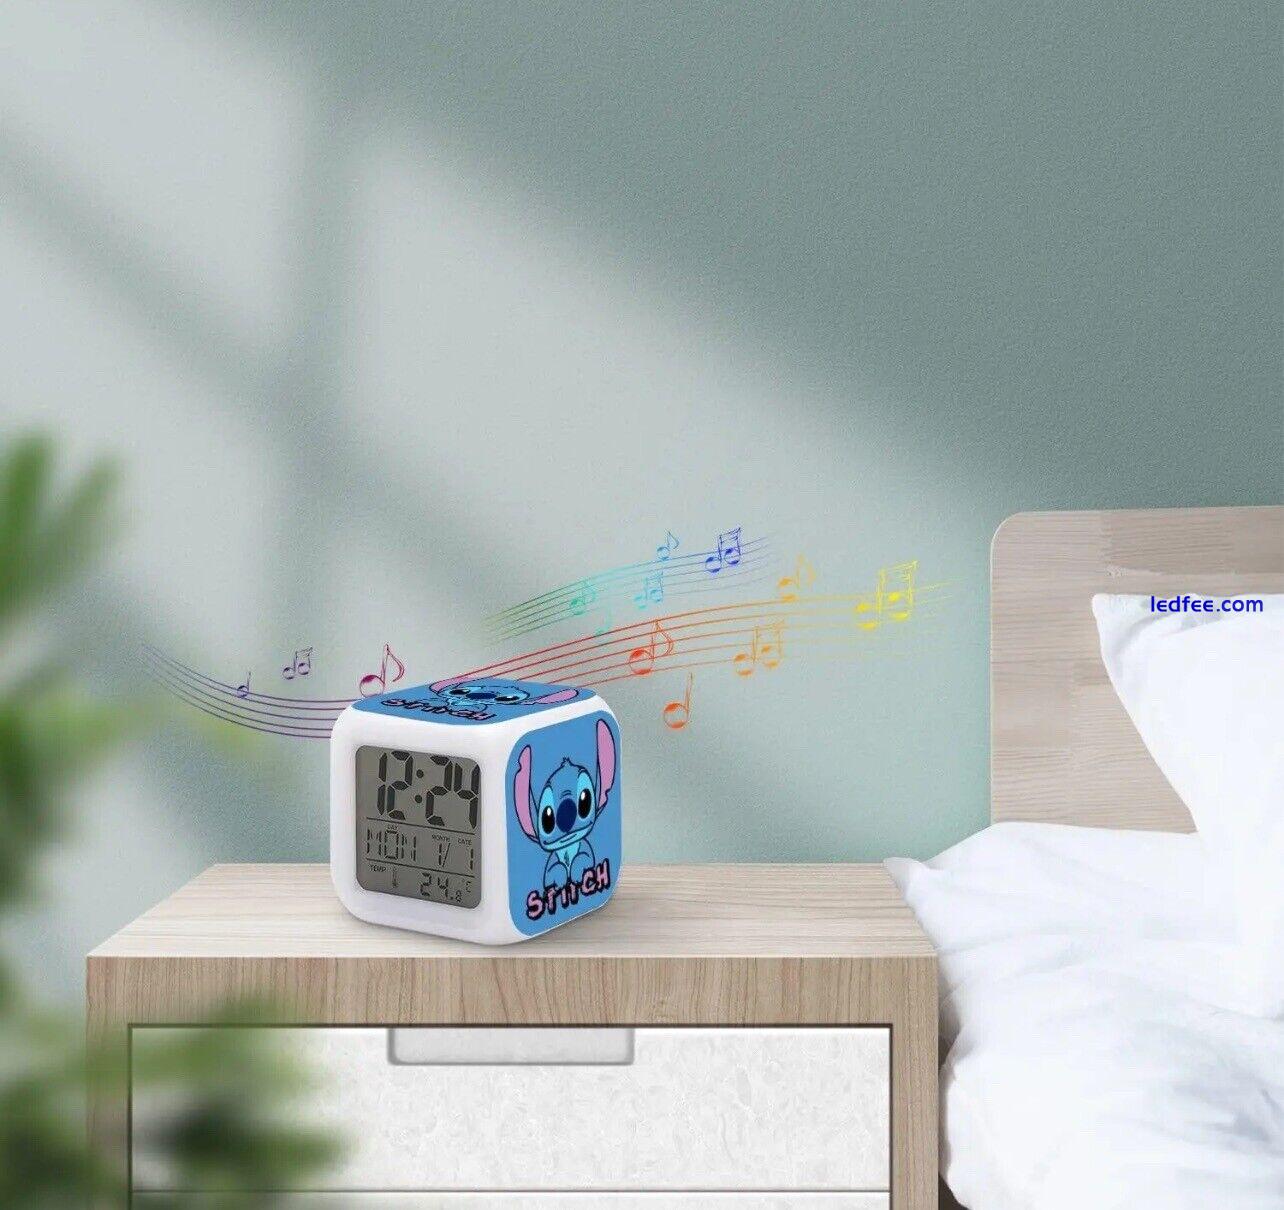 Disney Stitch Alarm Clock Digital Clock with Temperature Big LED Night Light, 5 